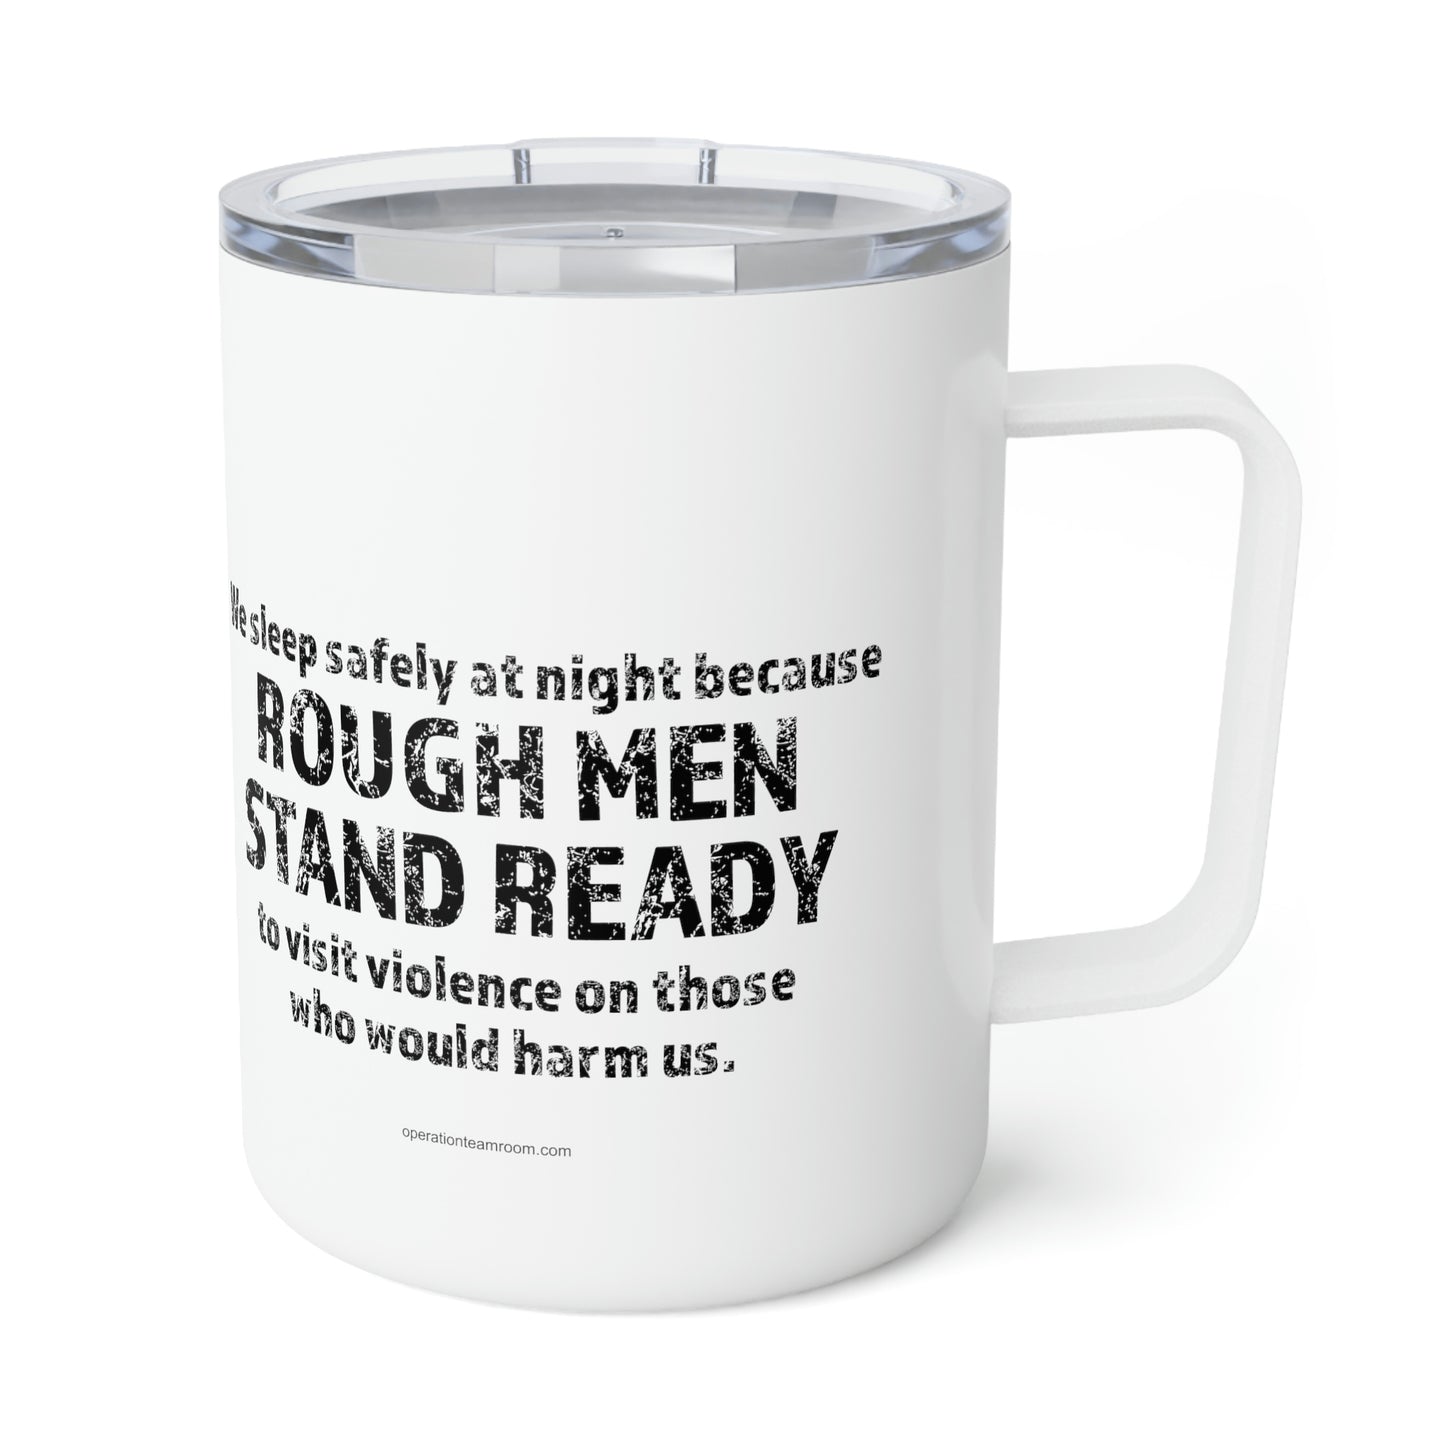 Rough Men Stand Ready Insulated Coffee Mug, 10oz